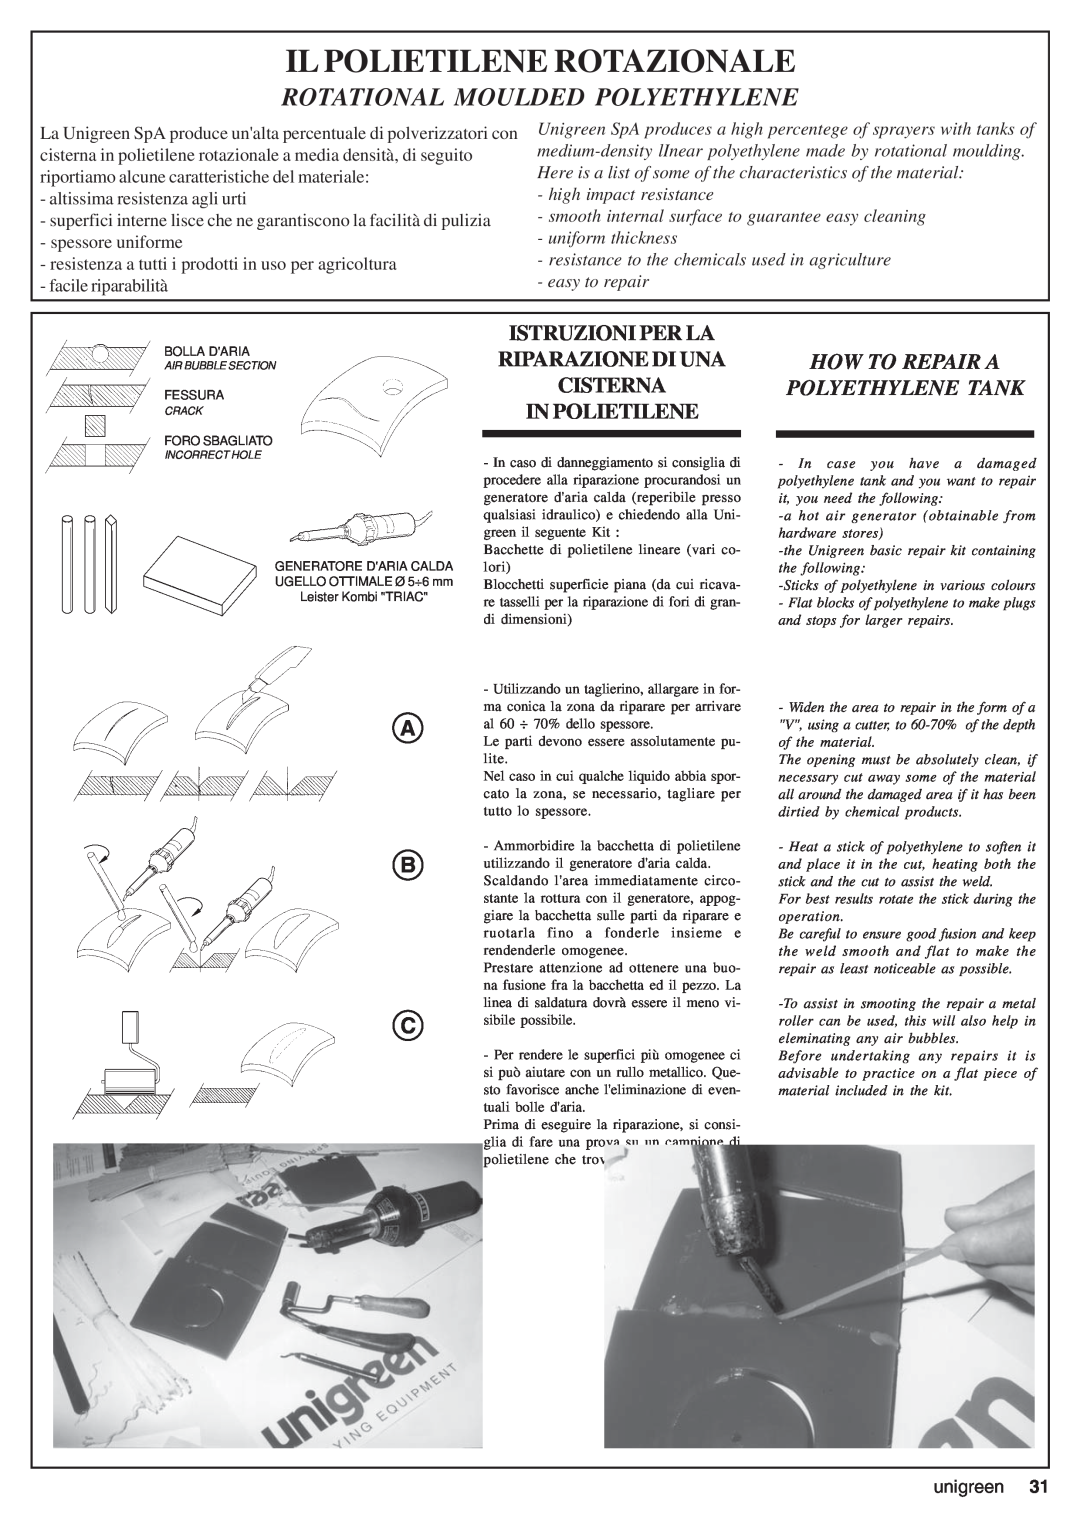 Unigreen CAMPO 11 - 16 - 22 - 32 manual Il Polietilene Rotazionale, Rotational Moulded Polyethylene, spessore uniforme 